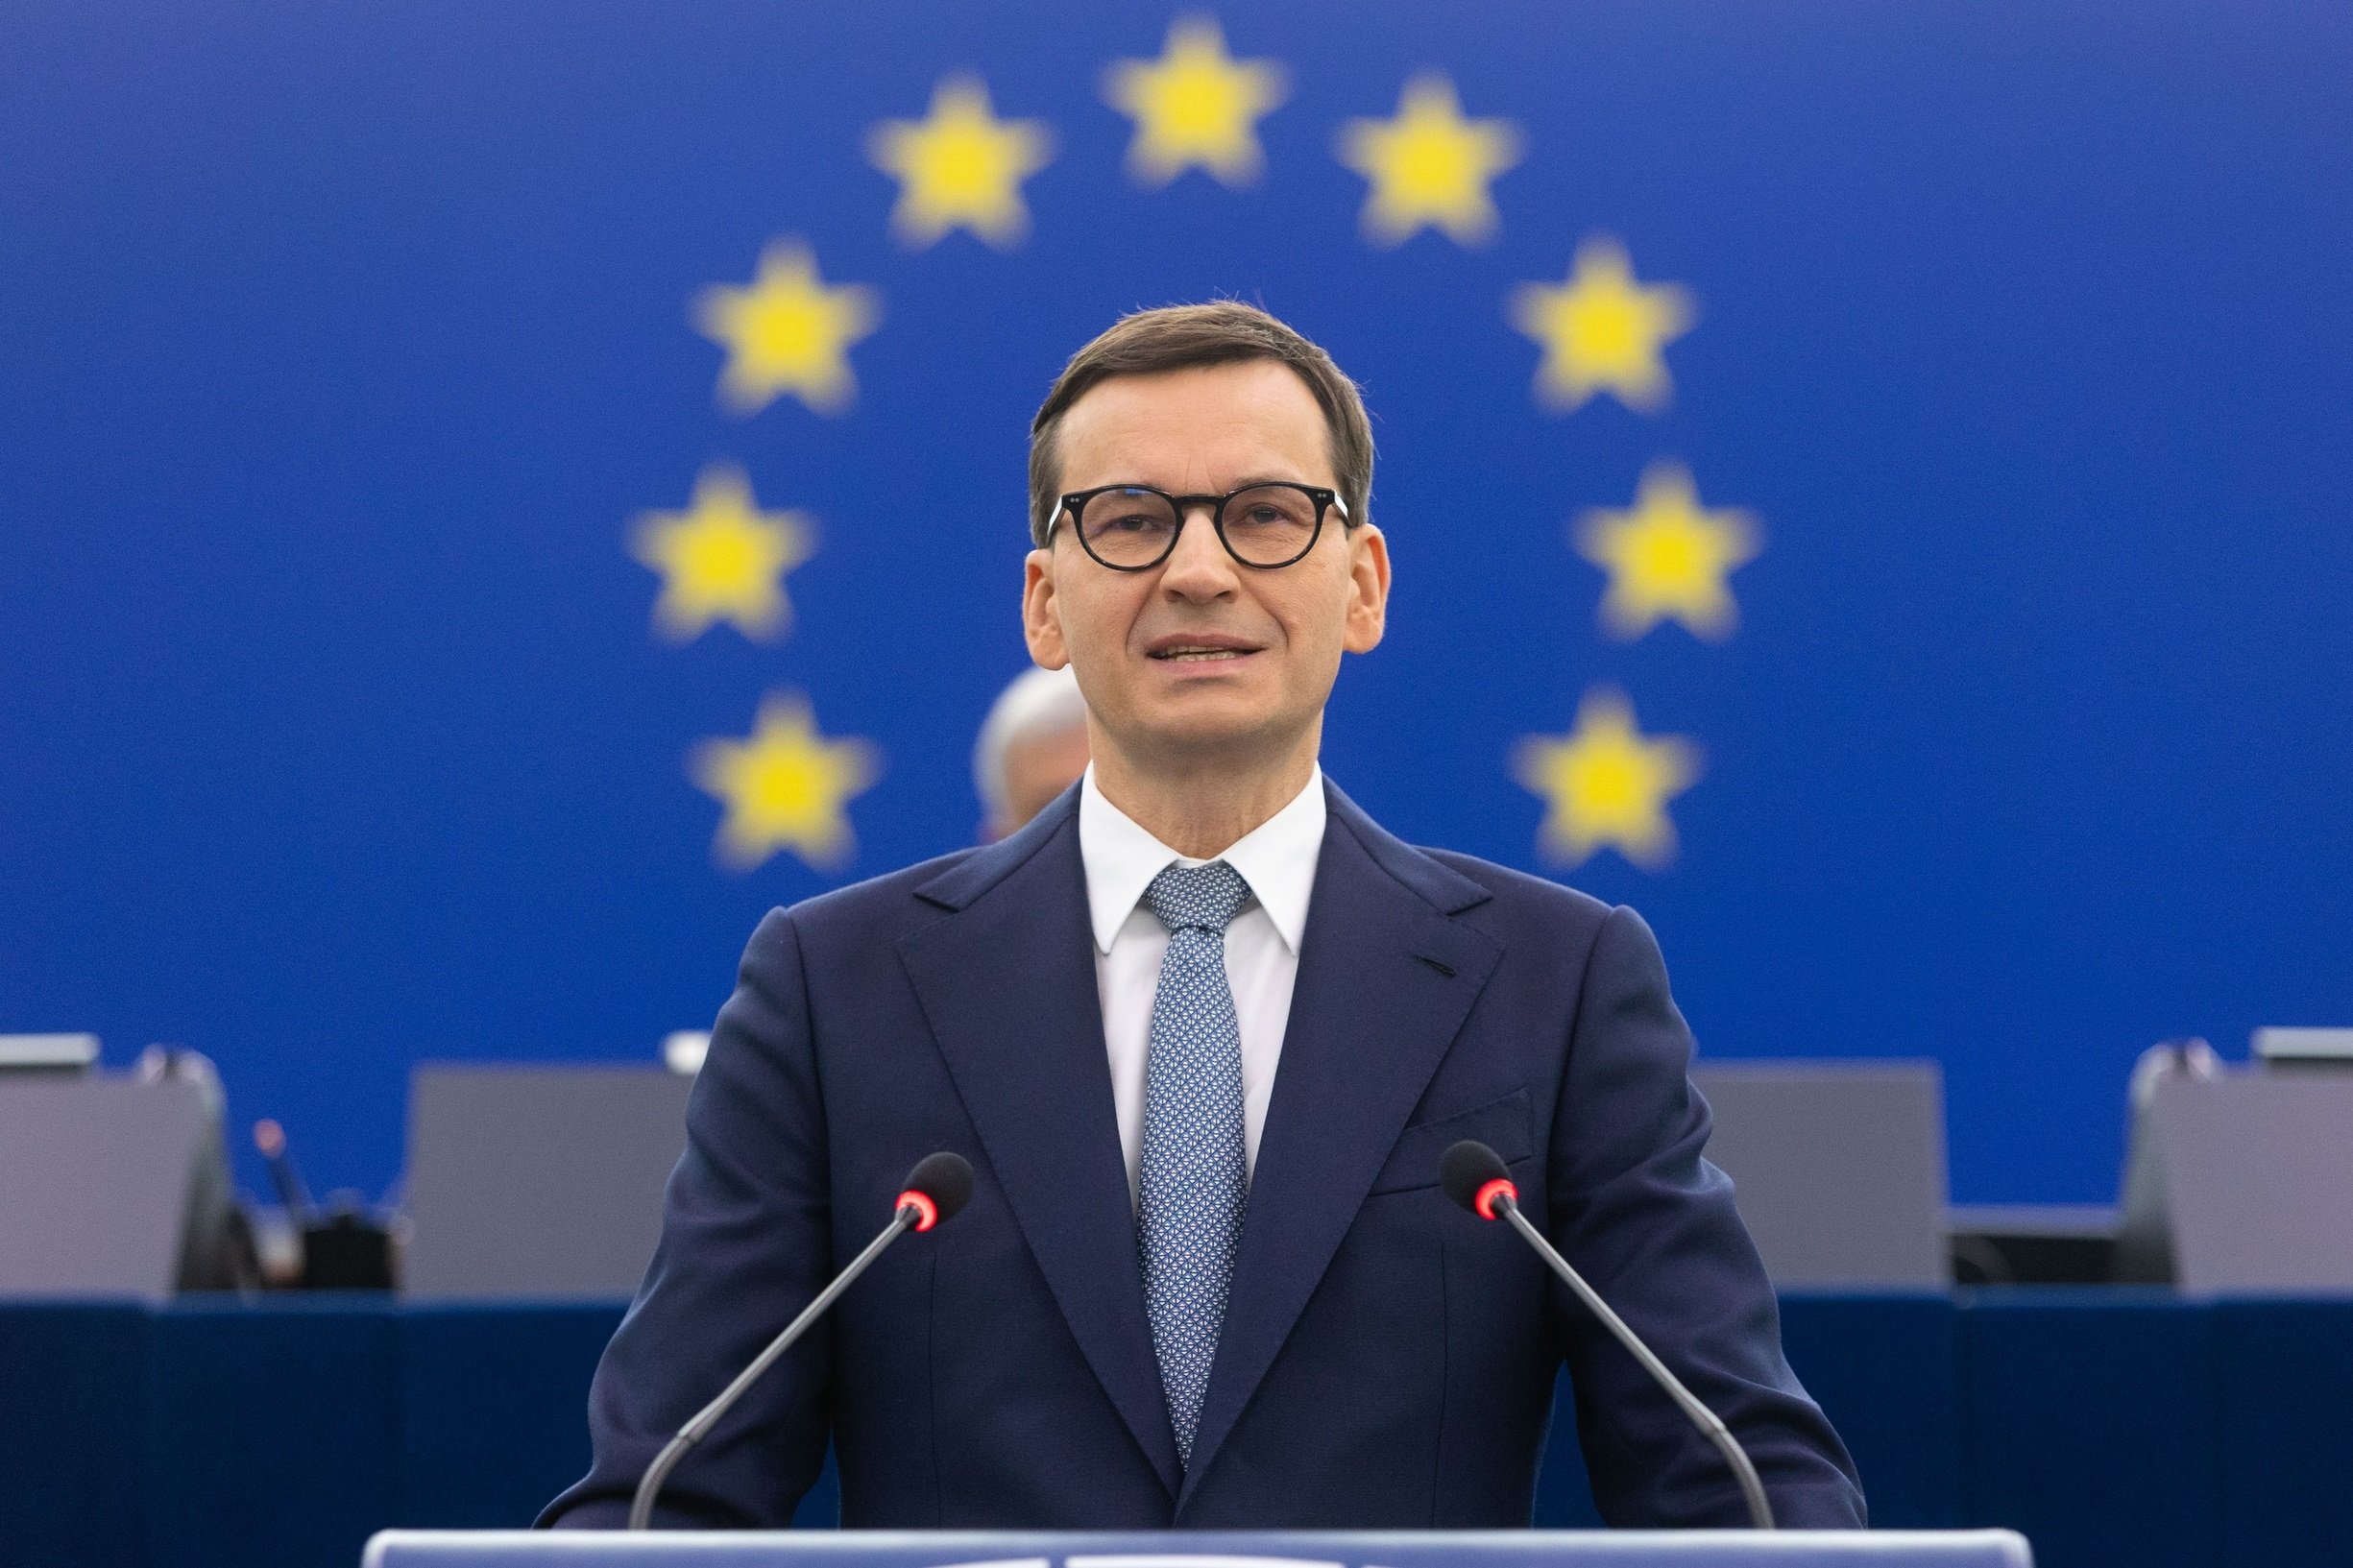 EuropaPress / Mateusz Morawiecki, primer ministro de Polonia,